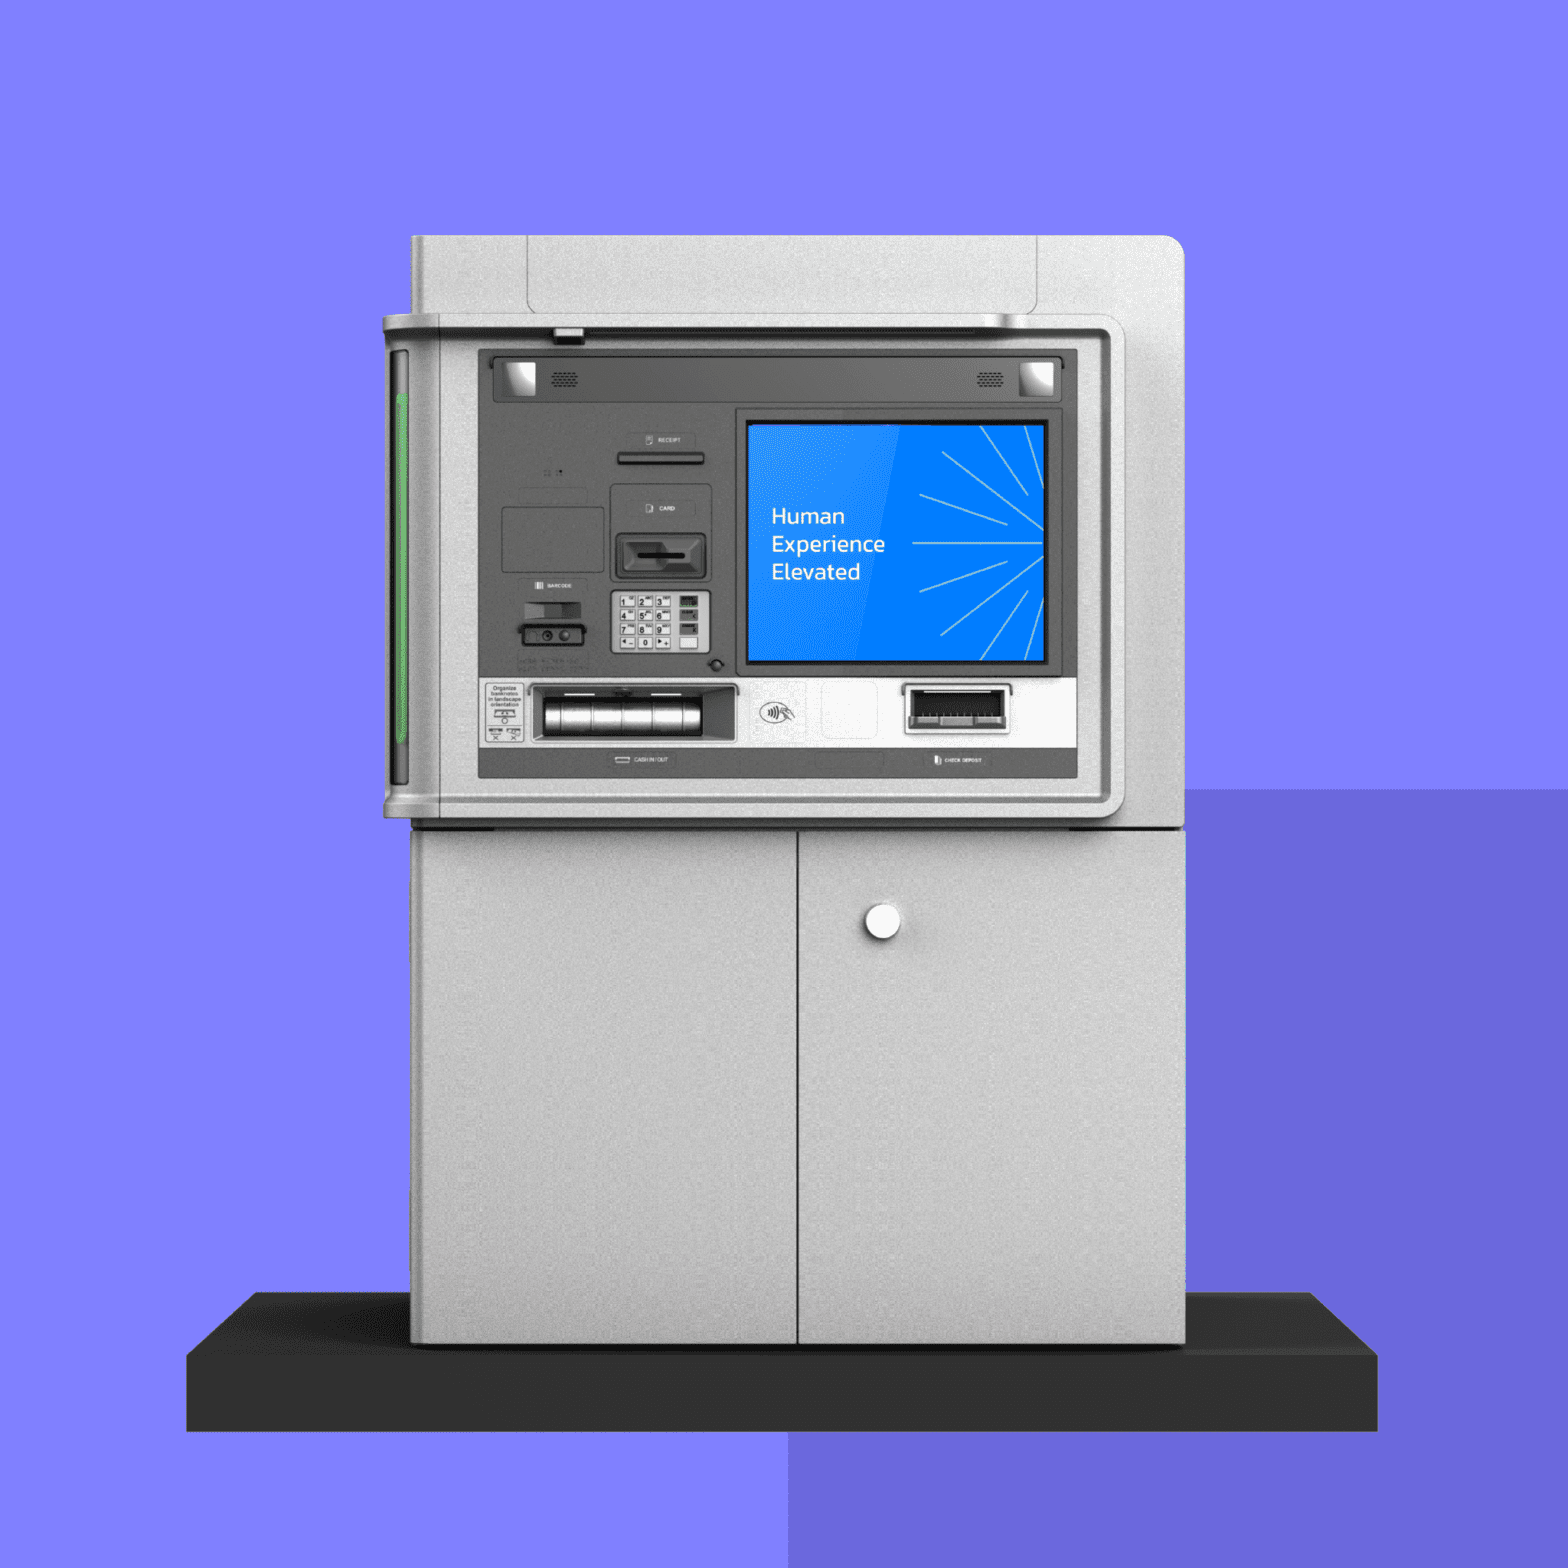 Image of Hyosung 8I (MX8300I), New Generation Recycling ATM